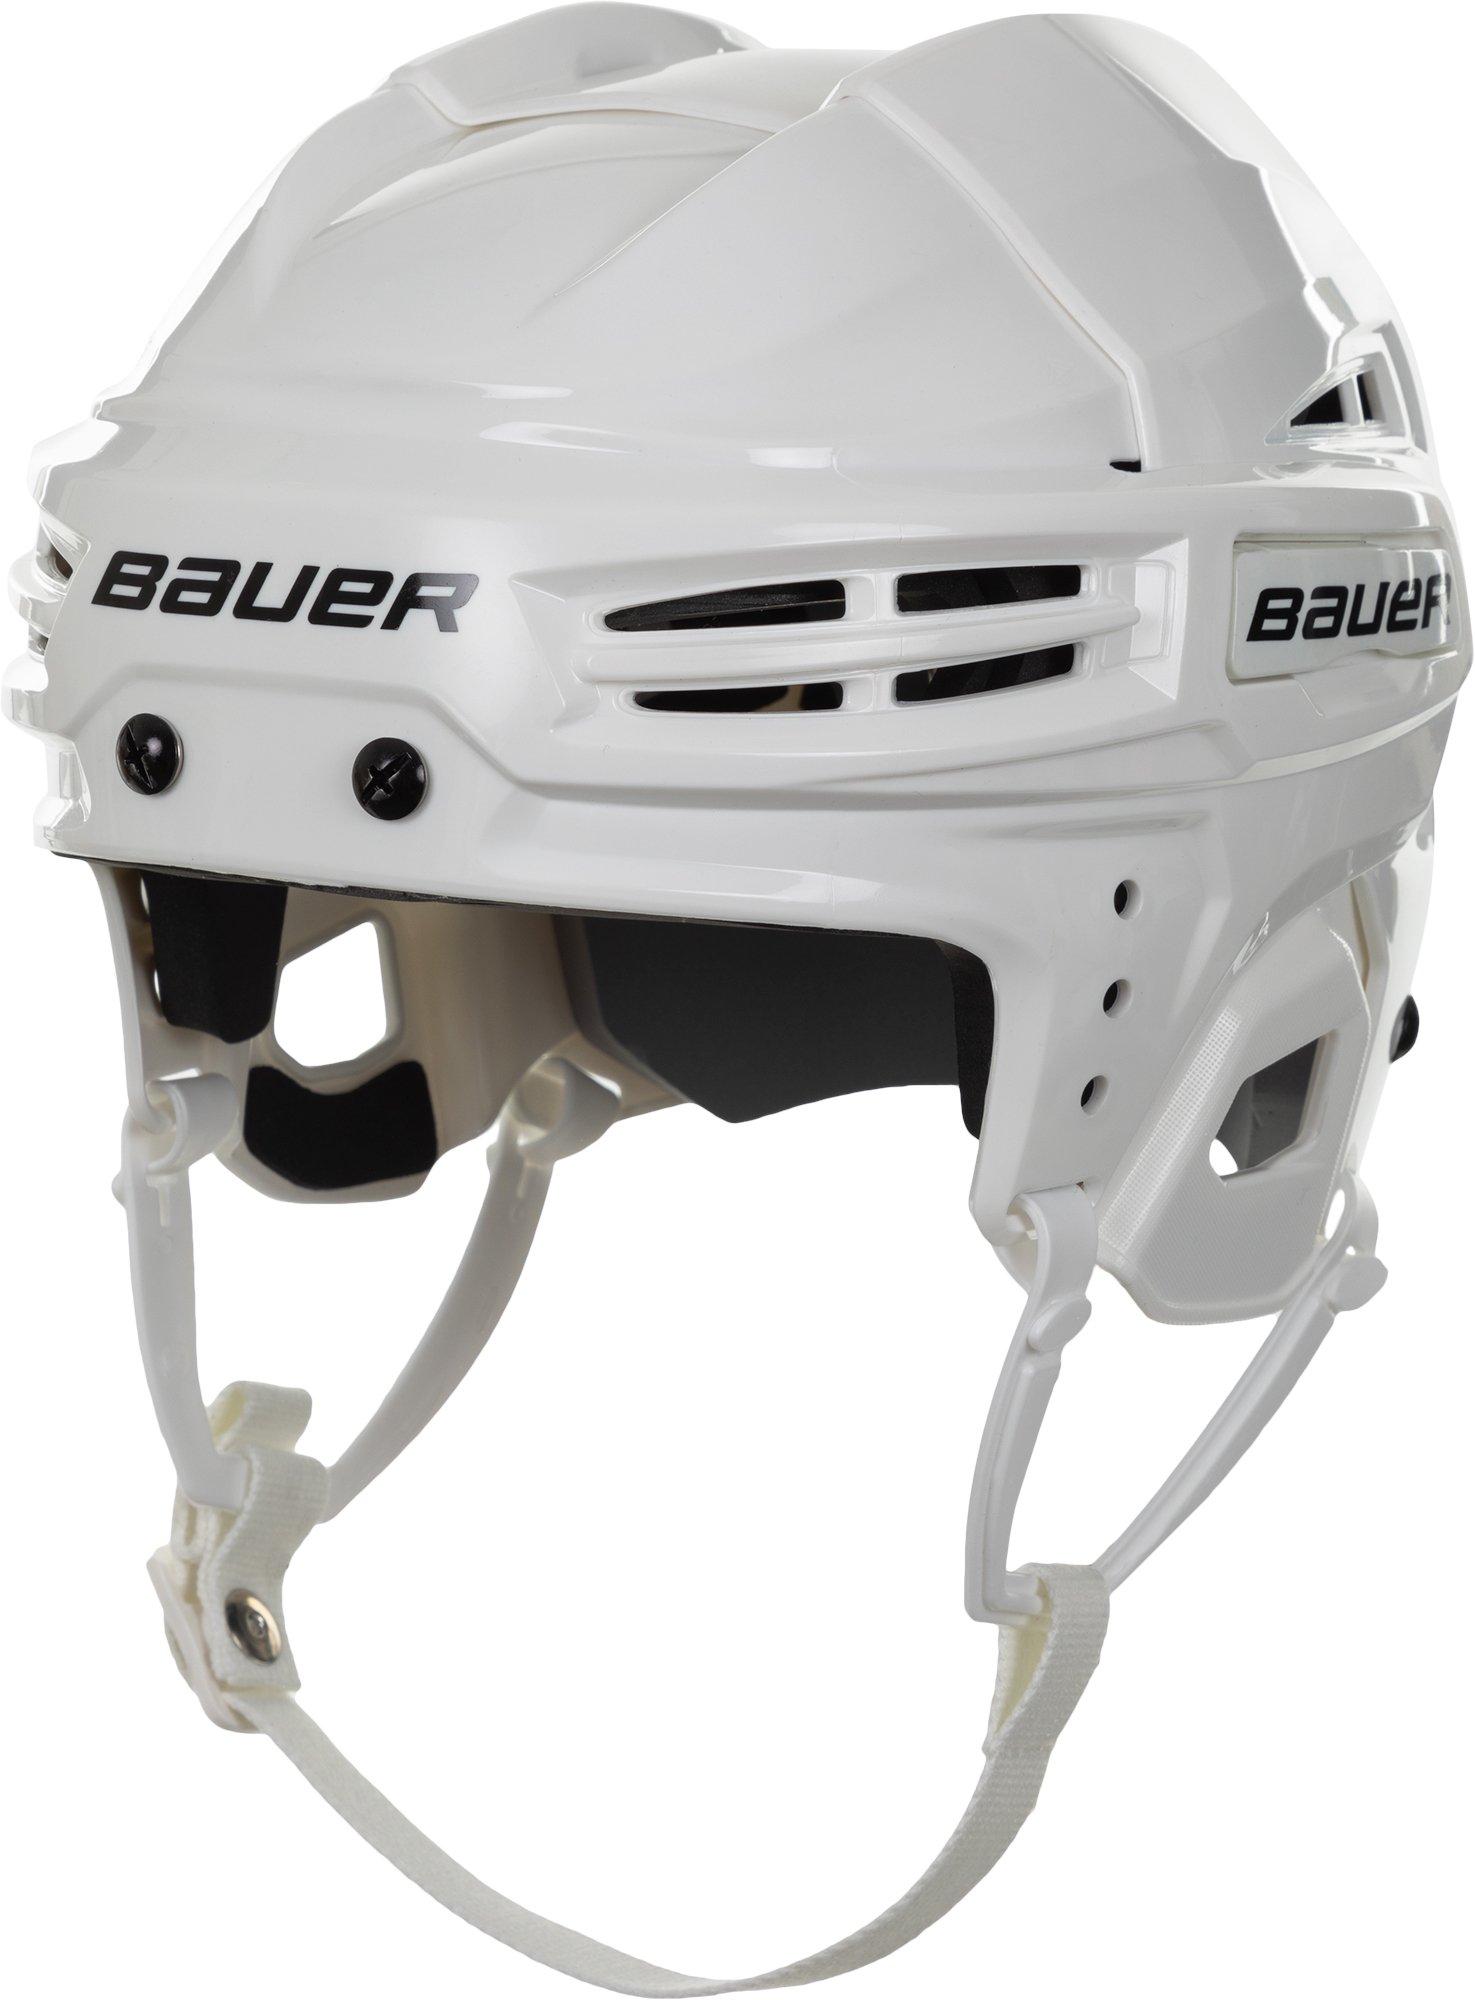 Спортмастер защита. Спортмастер хоккей. ССМ 710 шлем Размеры. Шлем хоккейный Nike Bauer one95 цена.